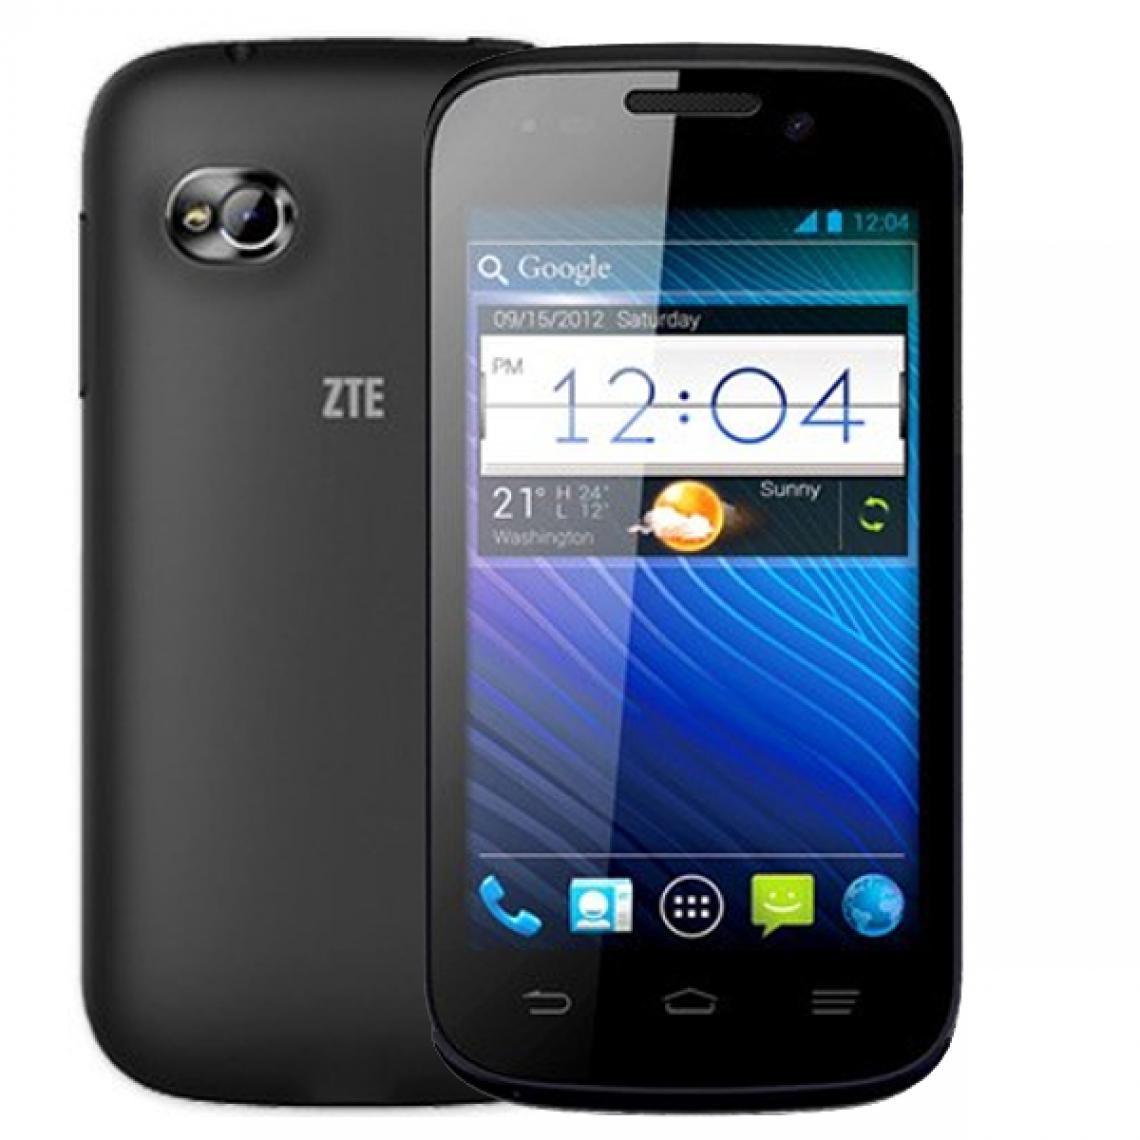 Zte - ZTE Blade C2 noir débloqué - Smartphone Android